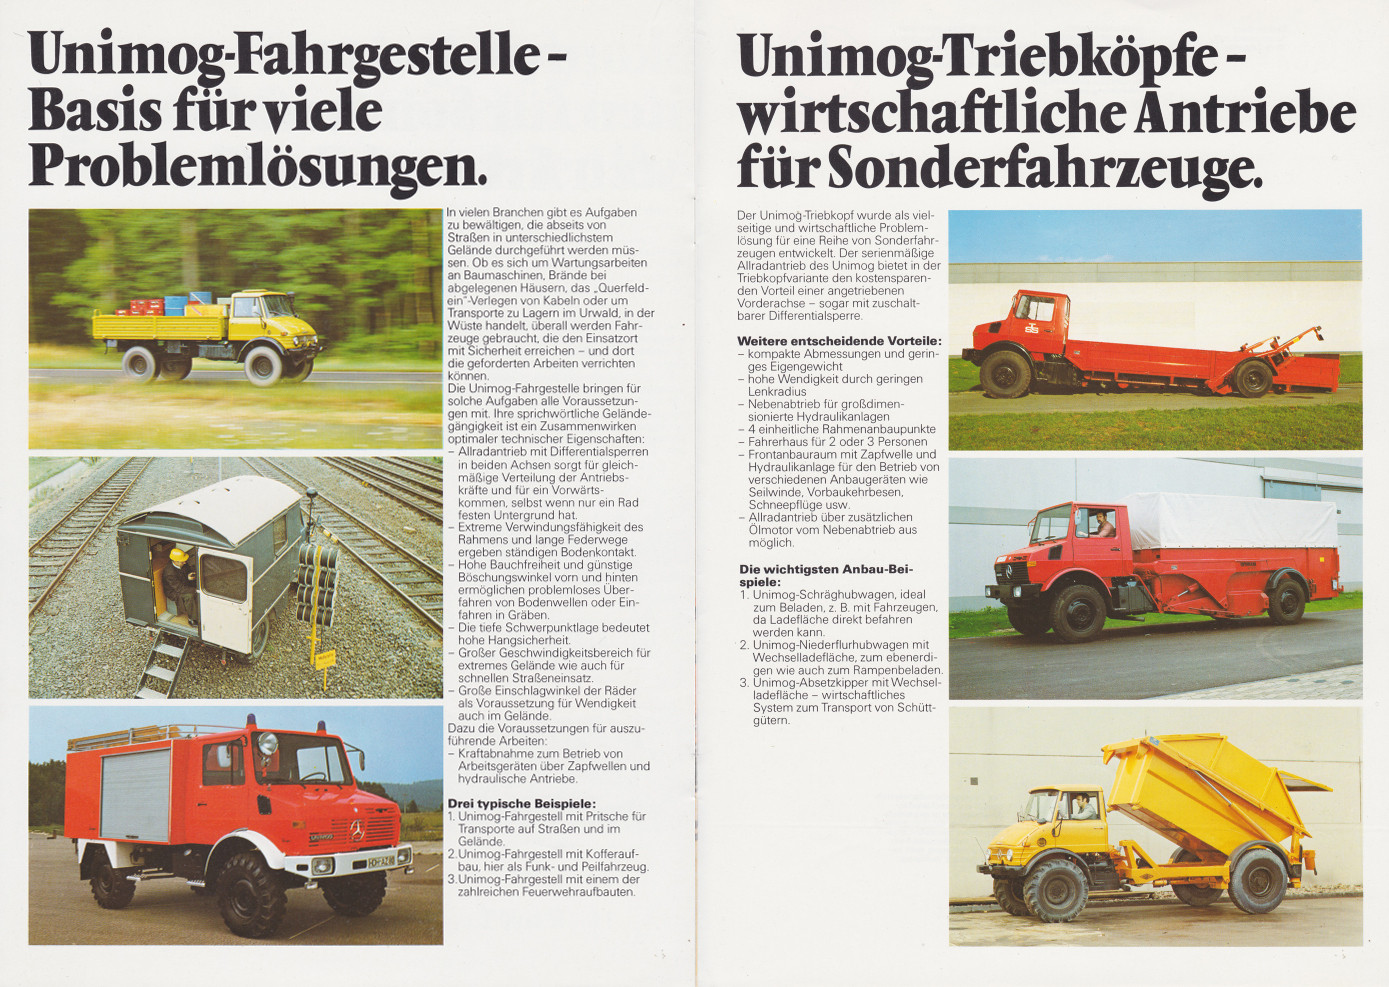 Photo: 007 | Unimog 1981-4 album | Dutch Model Truck Club | Fotki.com ...